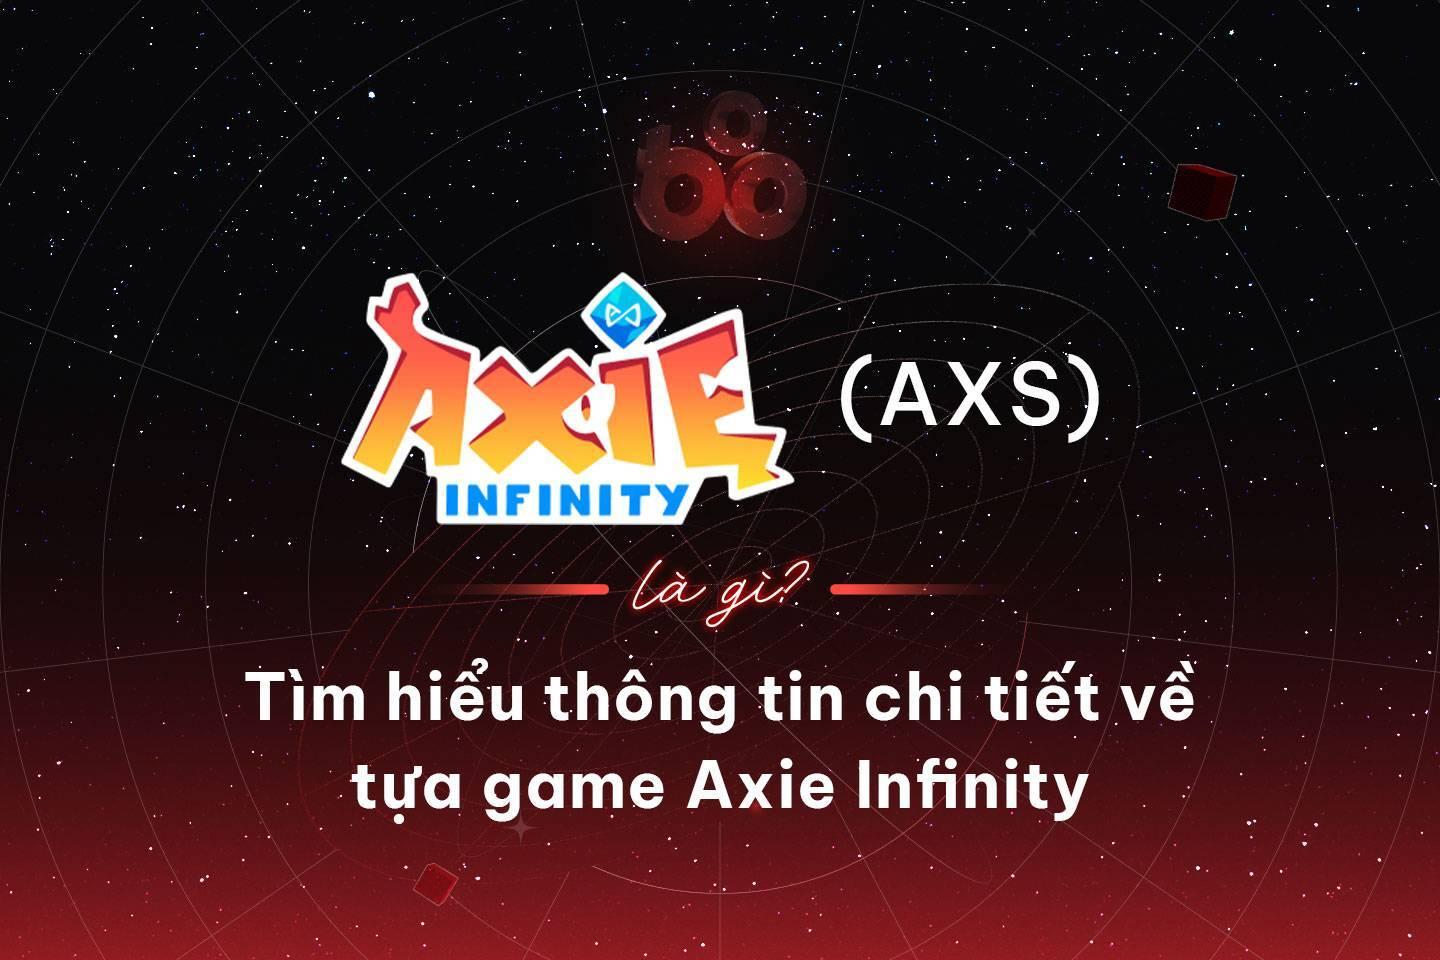 axie-infinity-axs-la-gi-tim-hieu-thong-tin-chi-tiet-ve-tua-game-axie-infinity